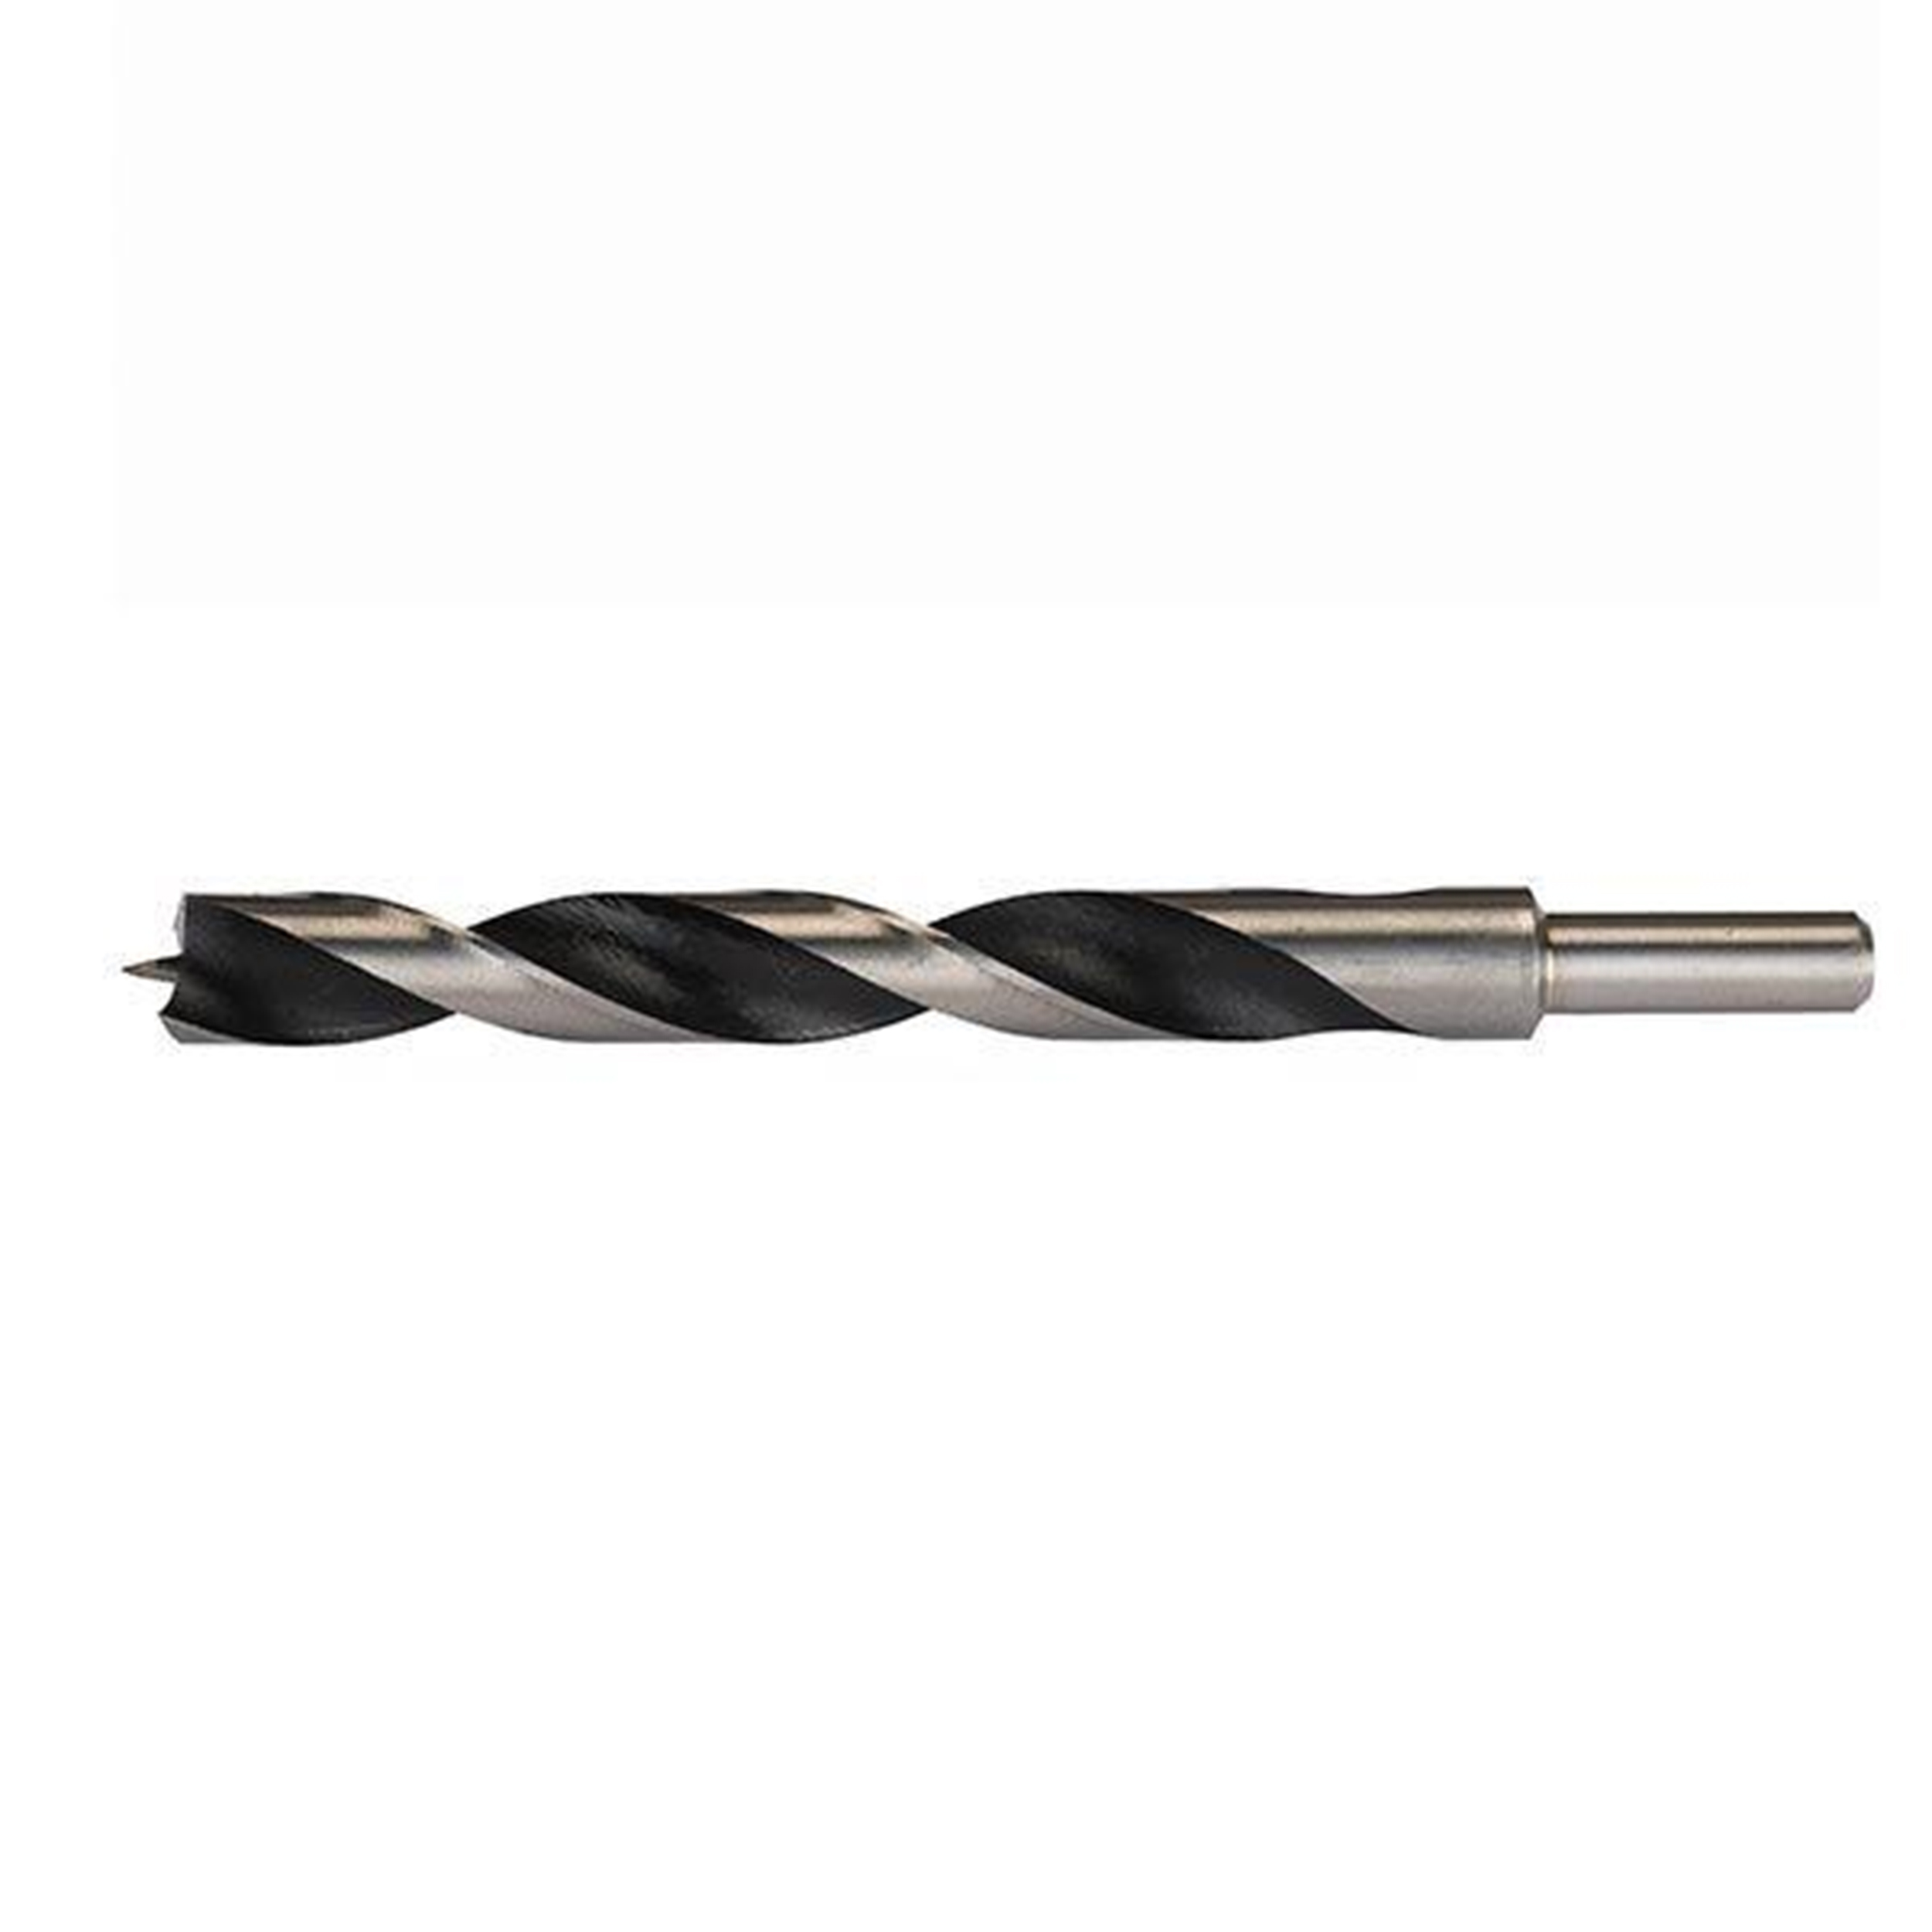 3/4-inch Chrome-vanadium Steel Brad Point Drill Bit